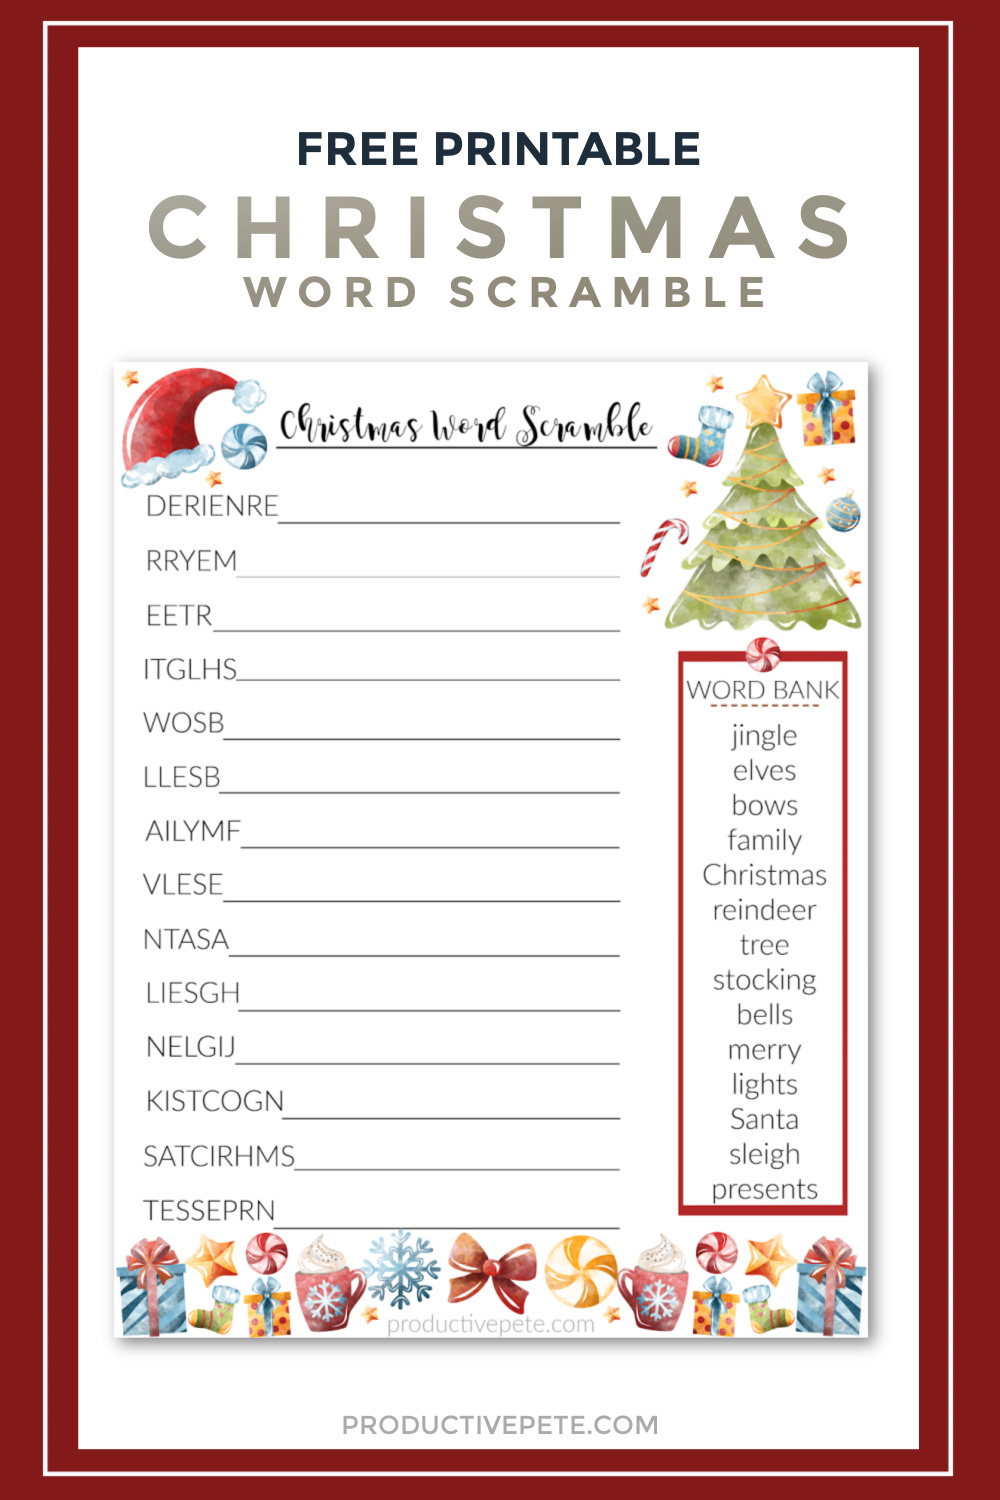 free-printable-christmas-word-scramble-pdf-for-kids-productive-pete